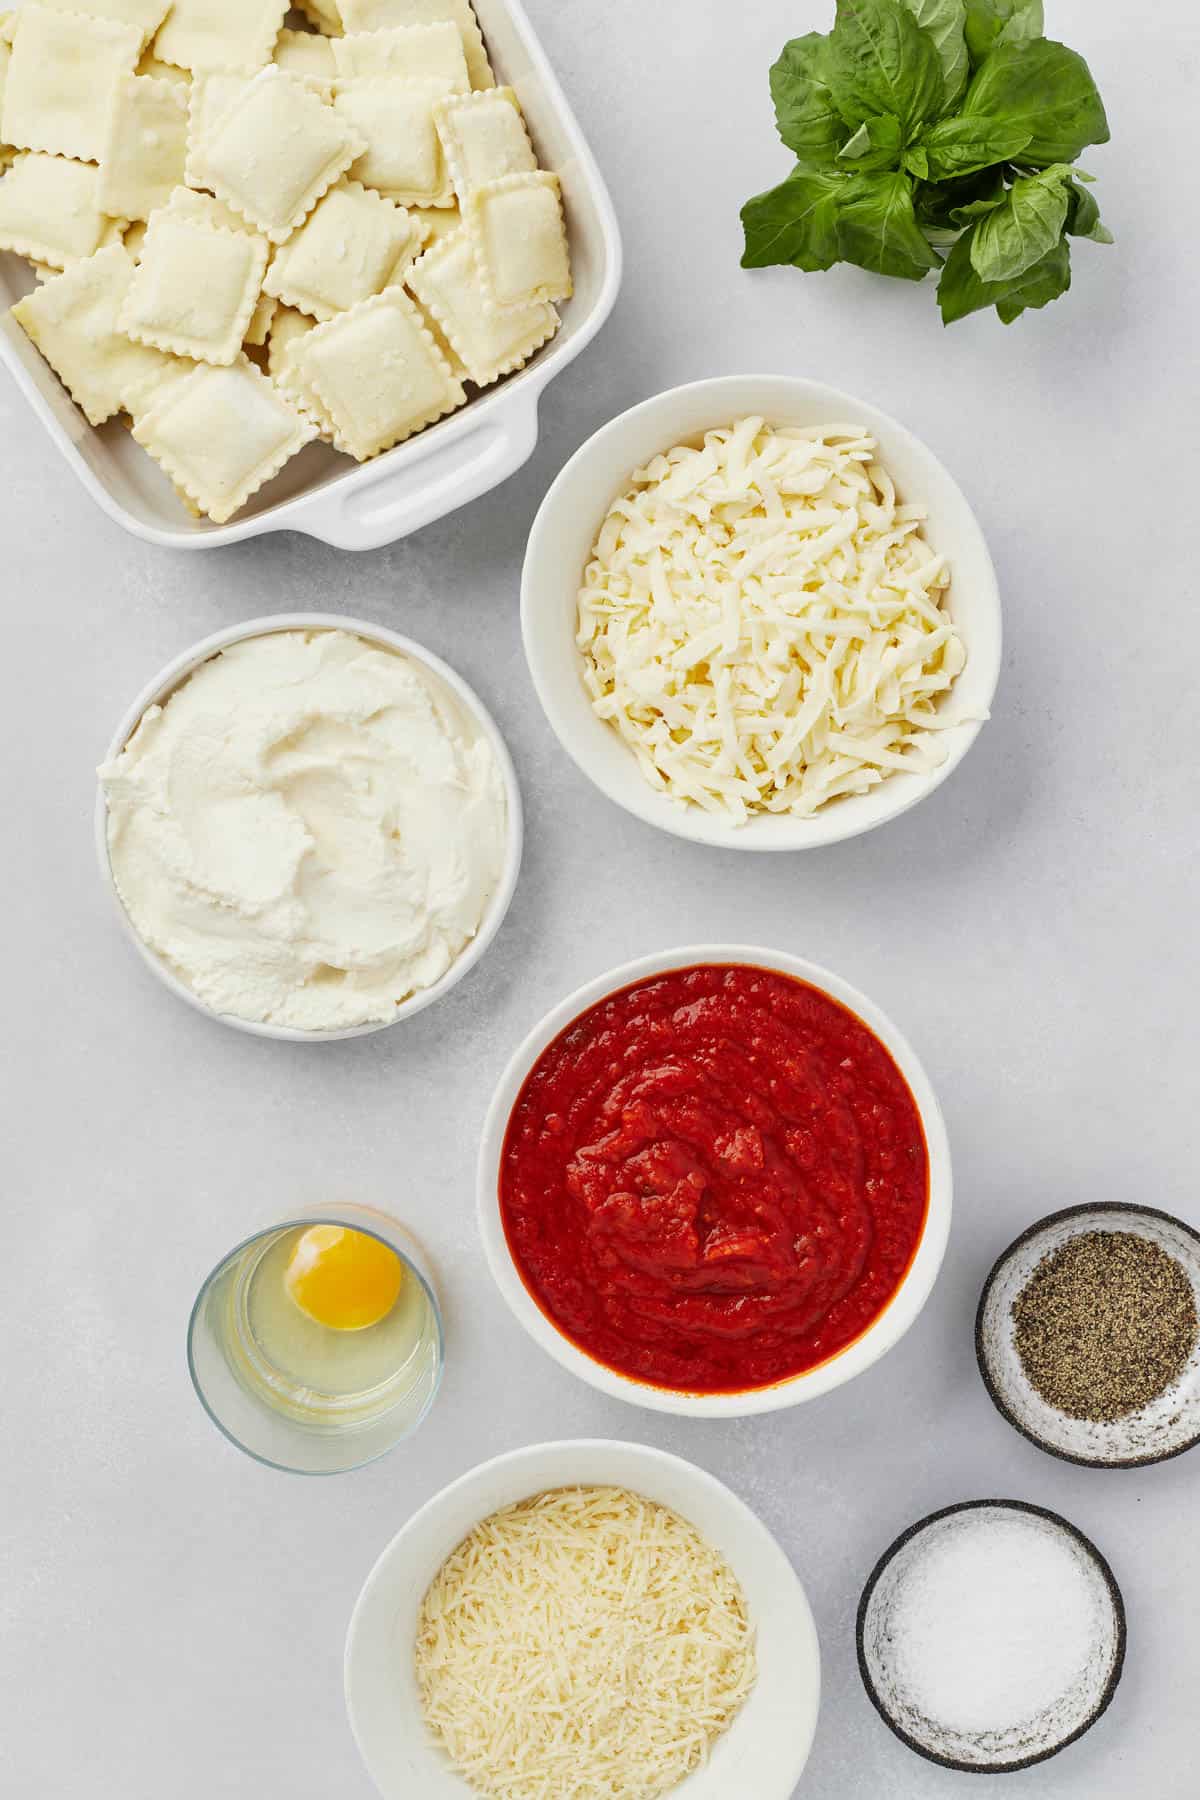 Ingredients for ravioli lasagna in separate bowls.